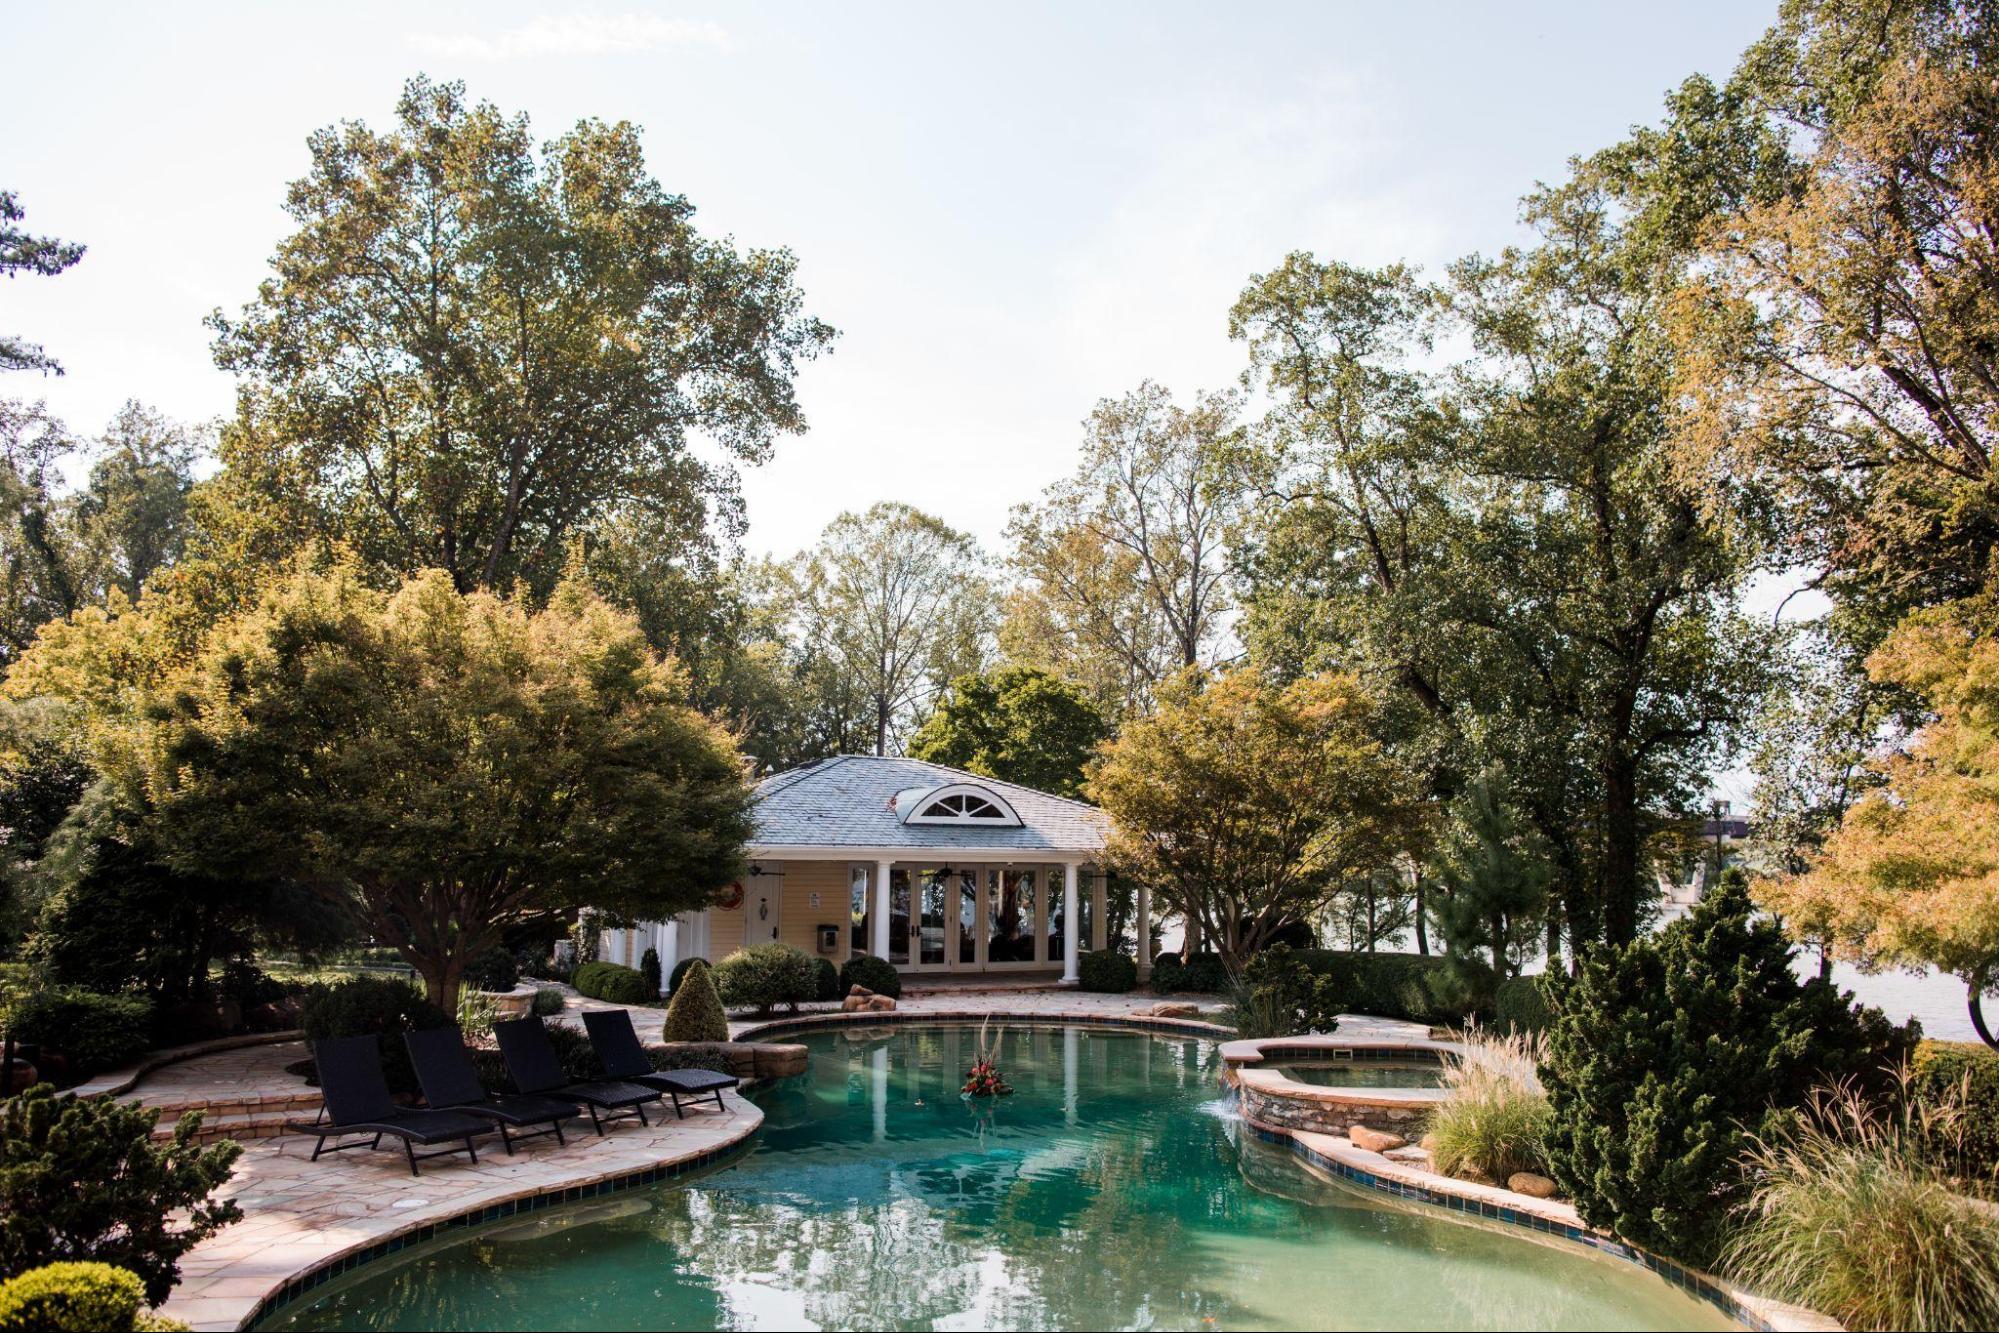 Nashville lakeside wedding venue, The Estate at Cherokee Dock, has versatility for couples wanting an outdoor destination wedding.